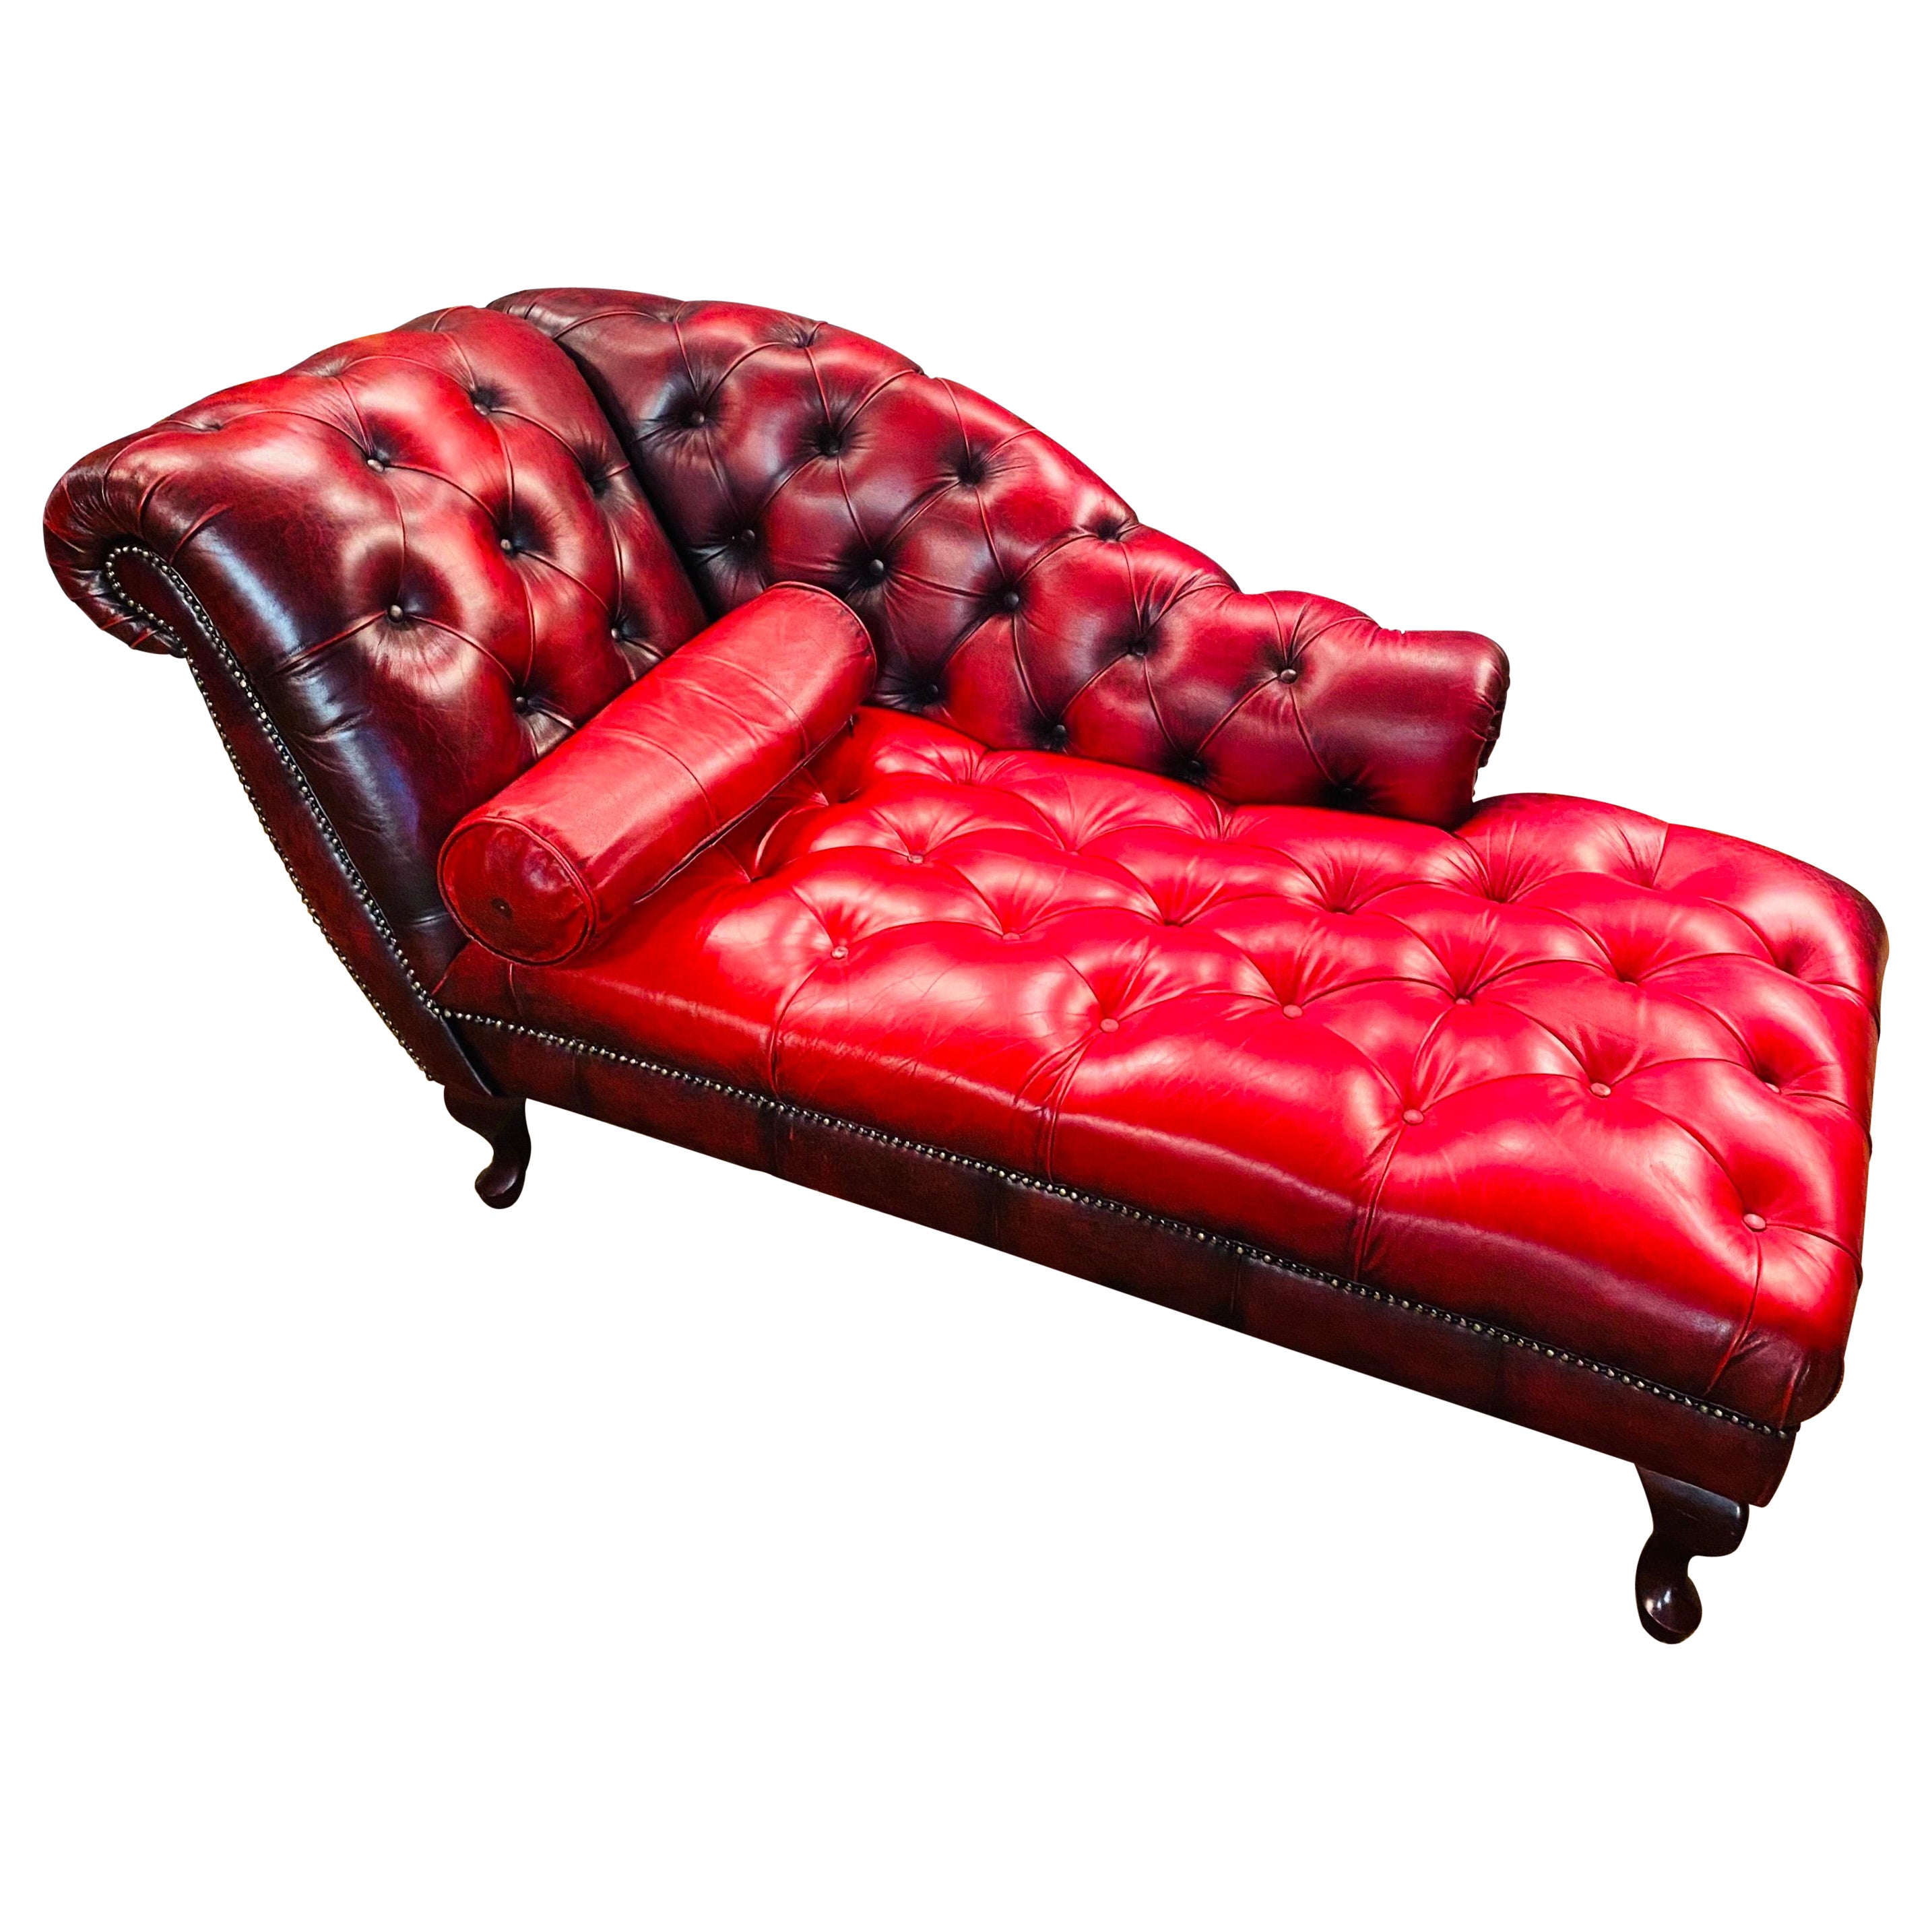 Schönes original vintage Chesterfield Rotes Leder Chaise Lounge Daybed Sofa im Angebot